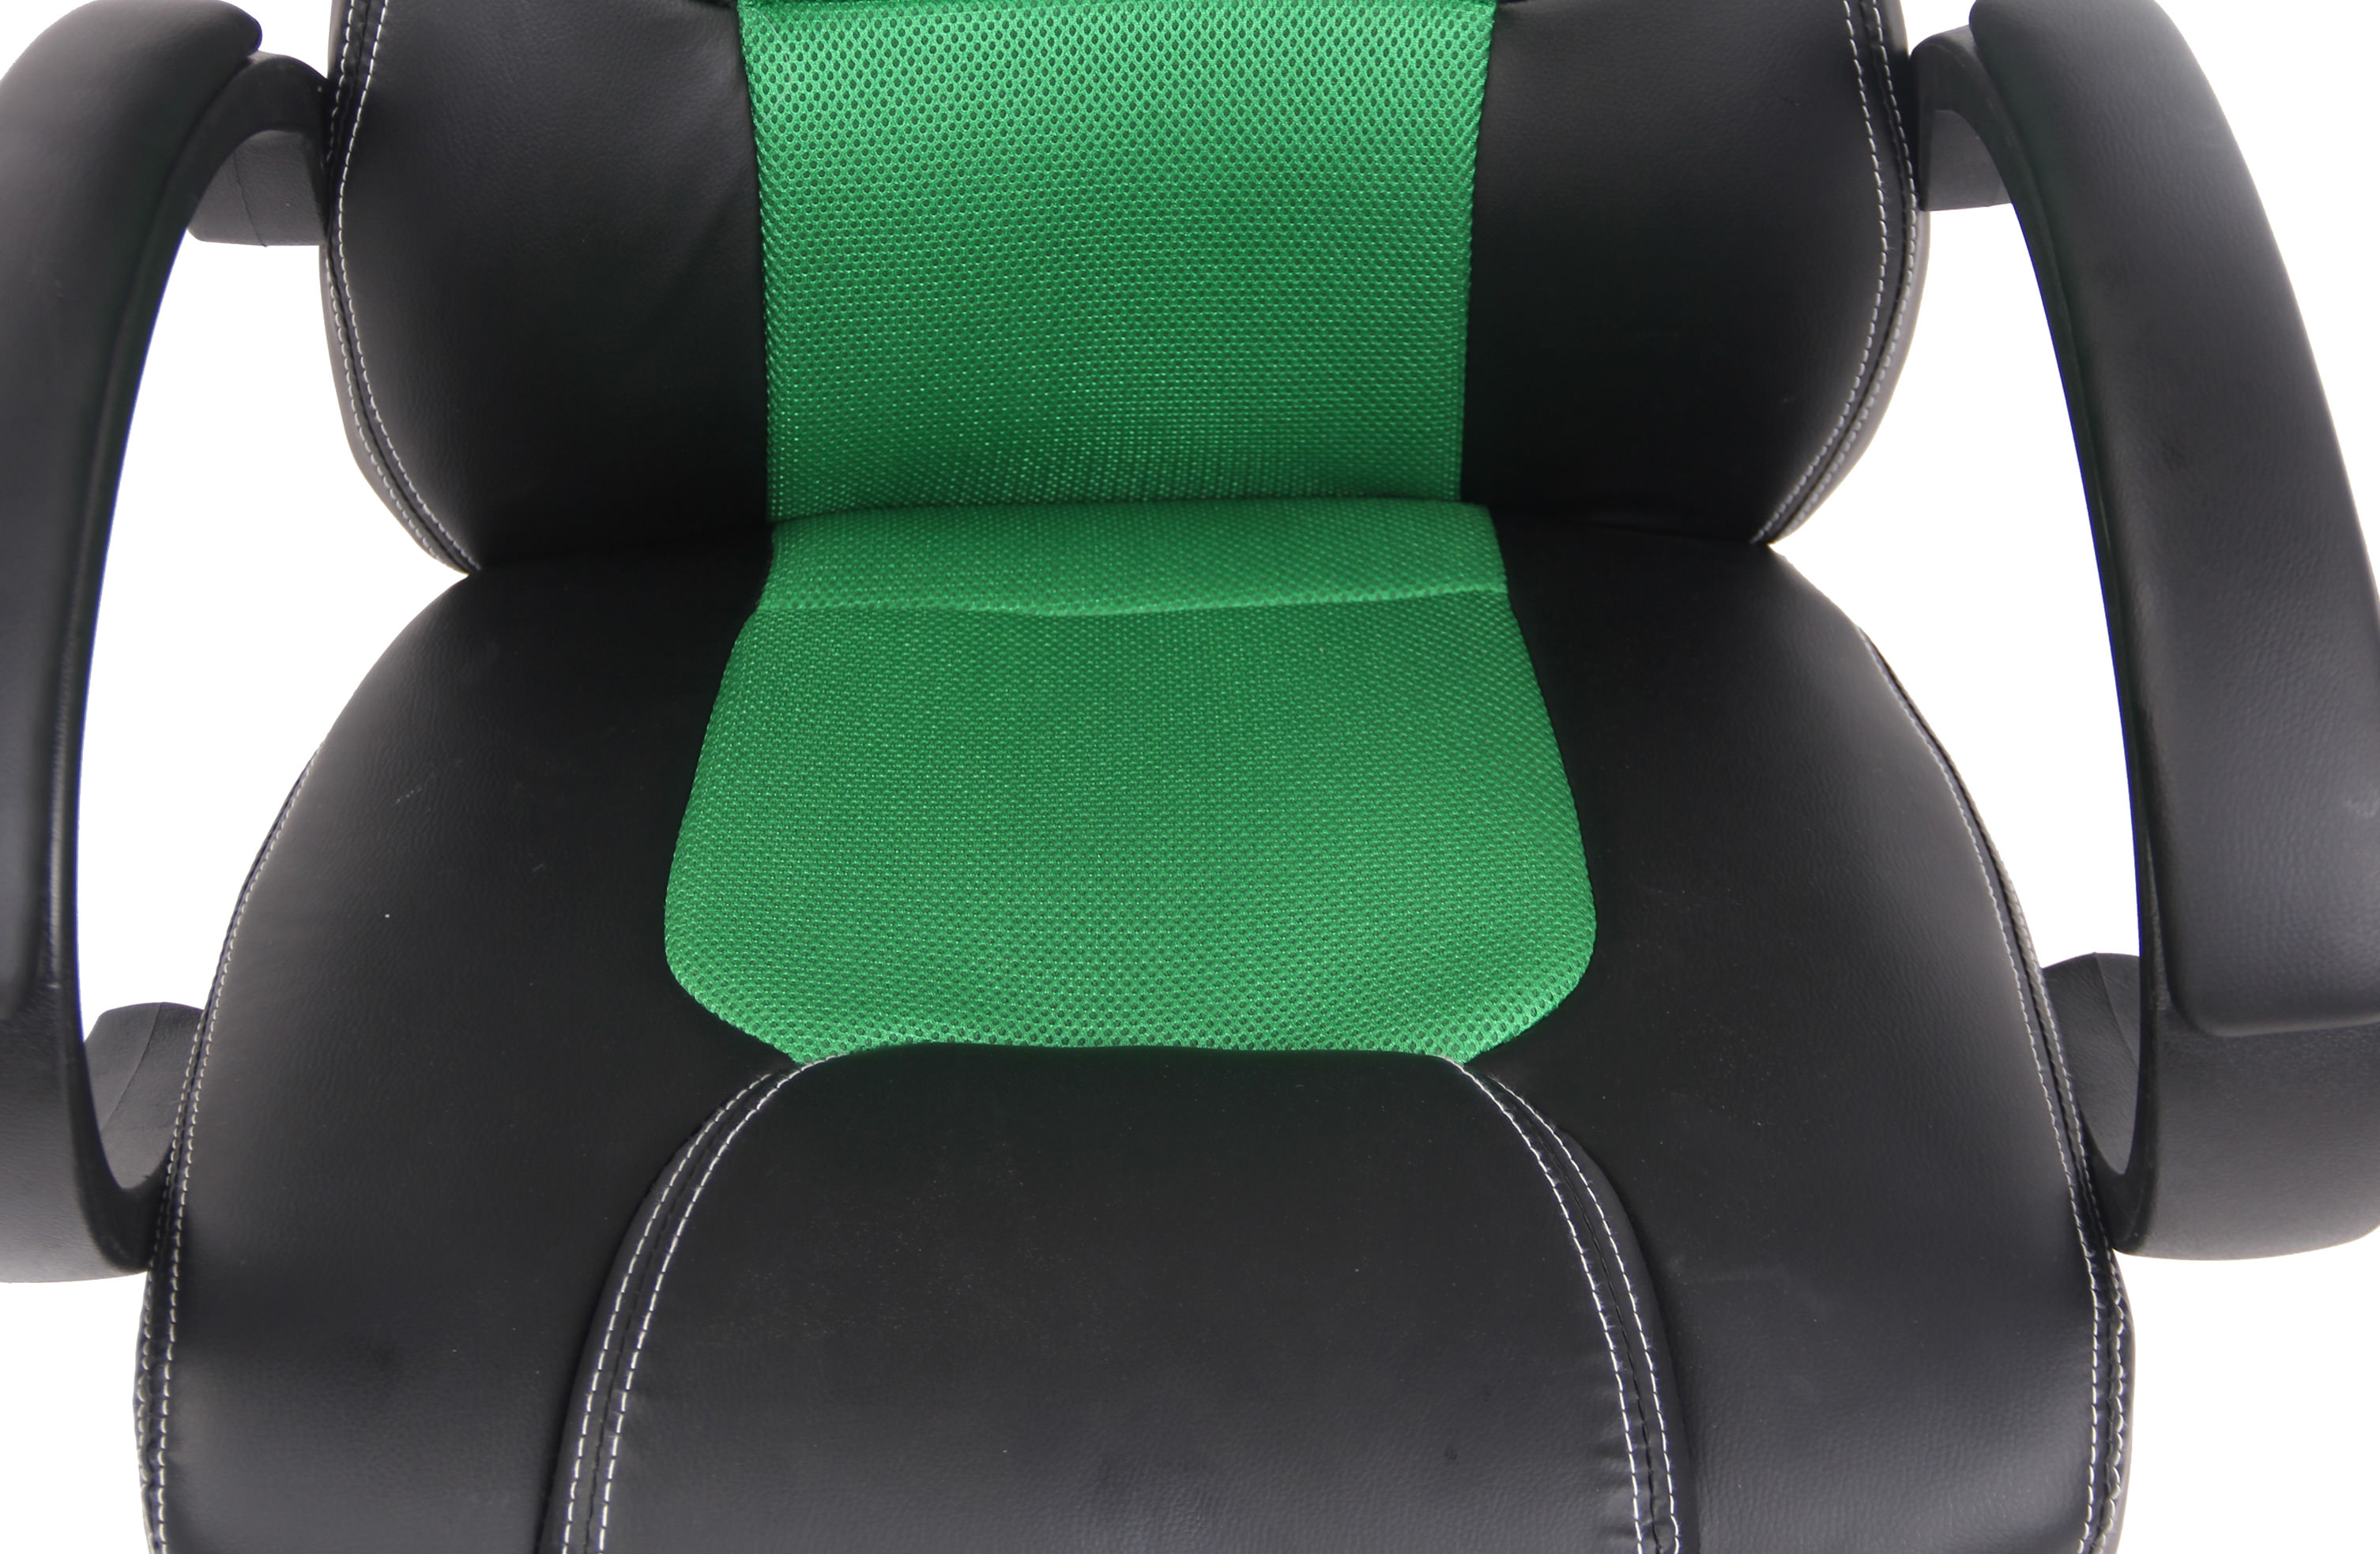 Chair, Racing Gaming Fire Bürostuhl grün CLP